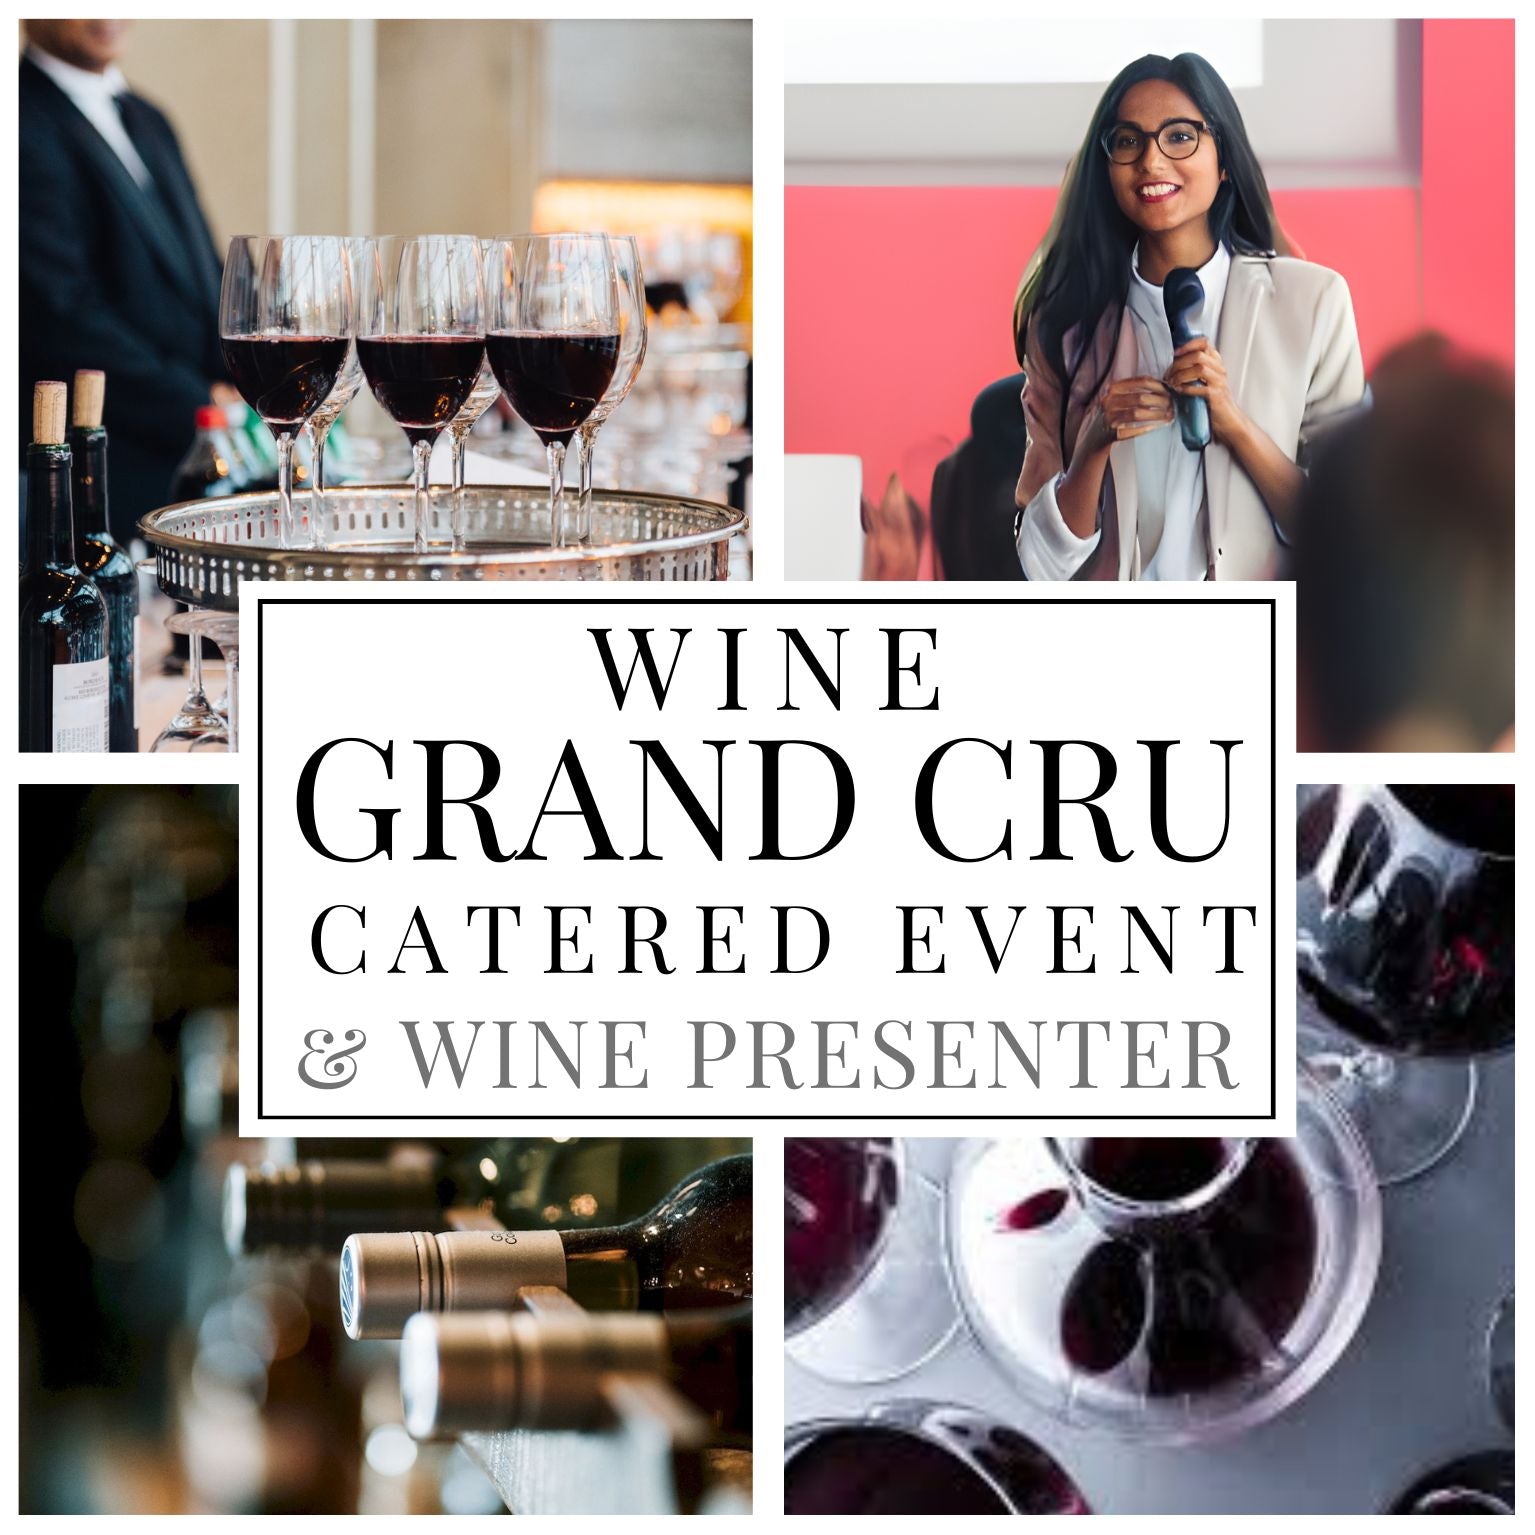 Grand Cru Wine Event with Presenter